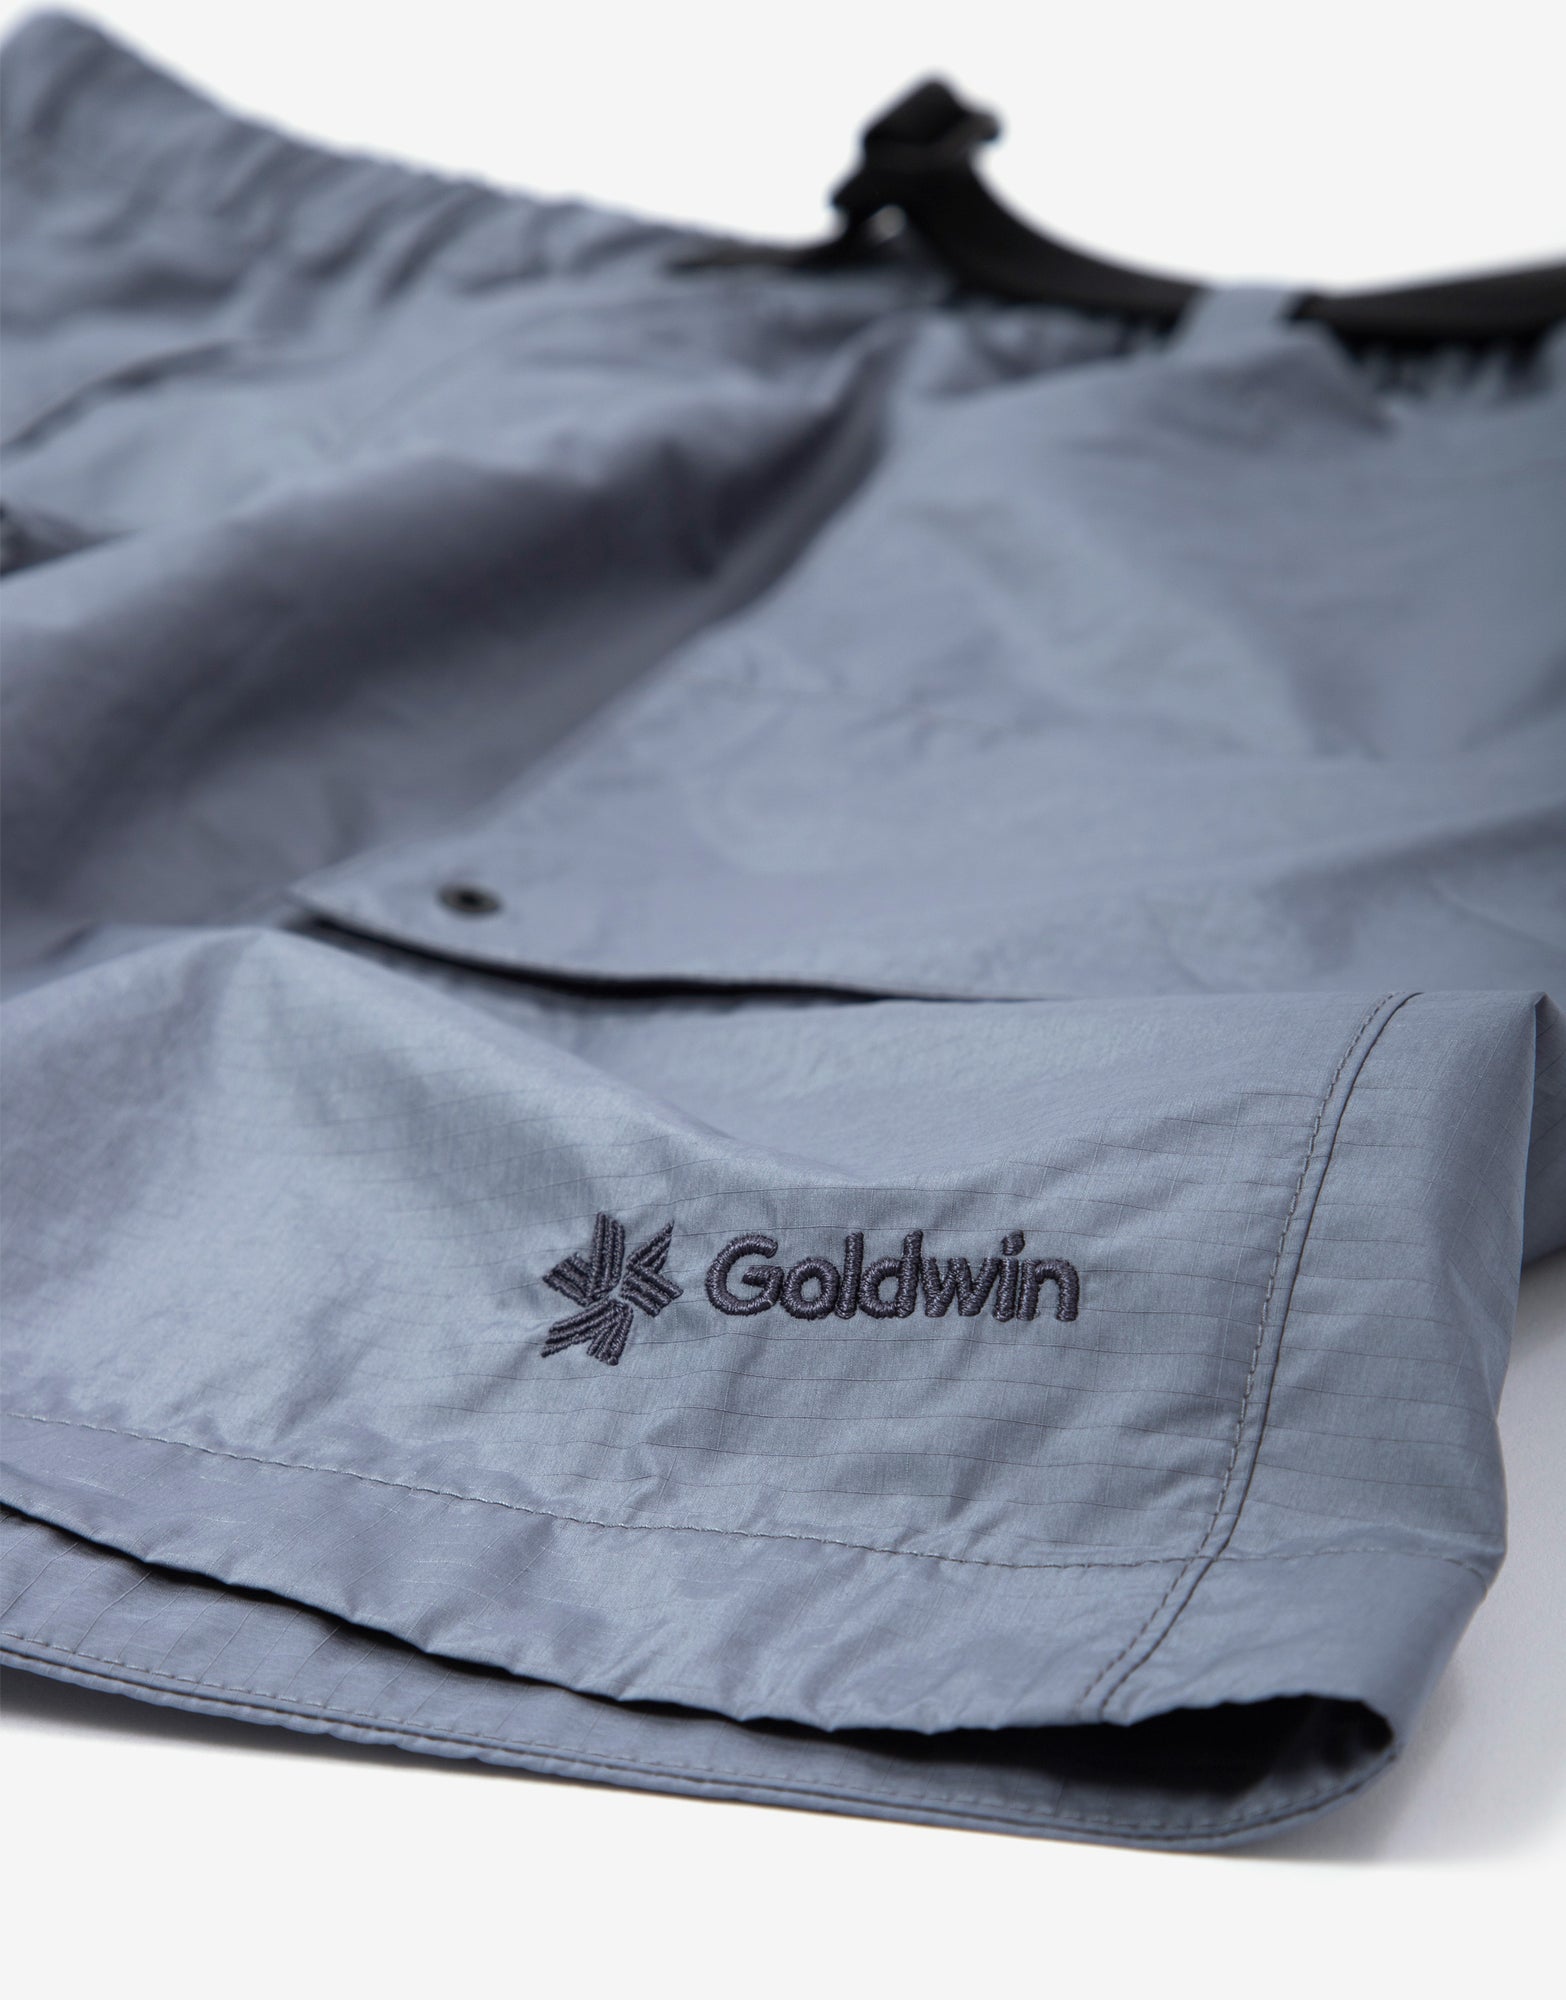 Goldwin Rip-Stop Cargo Shorts - Endurance Gray